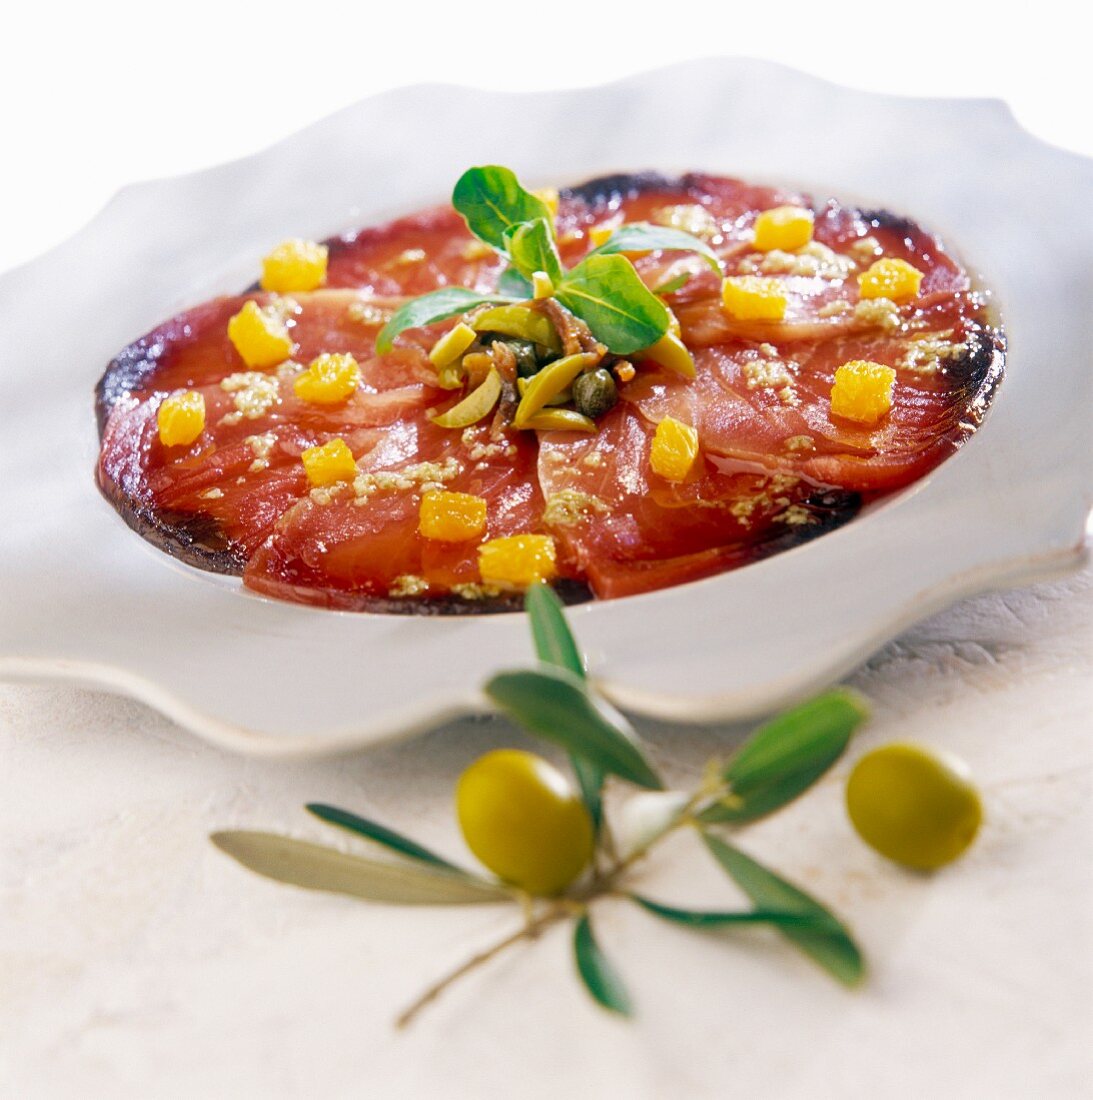 Tuna carpaccio with orange,capers and olives